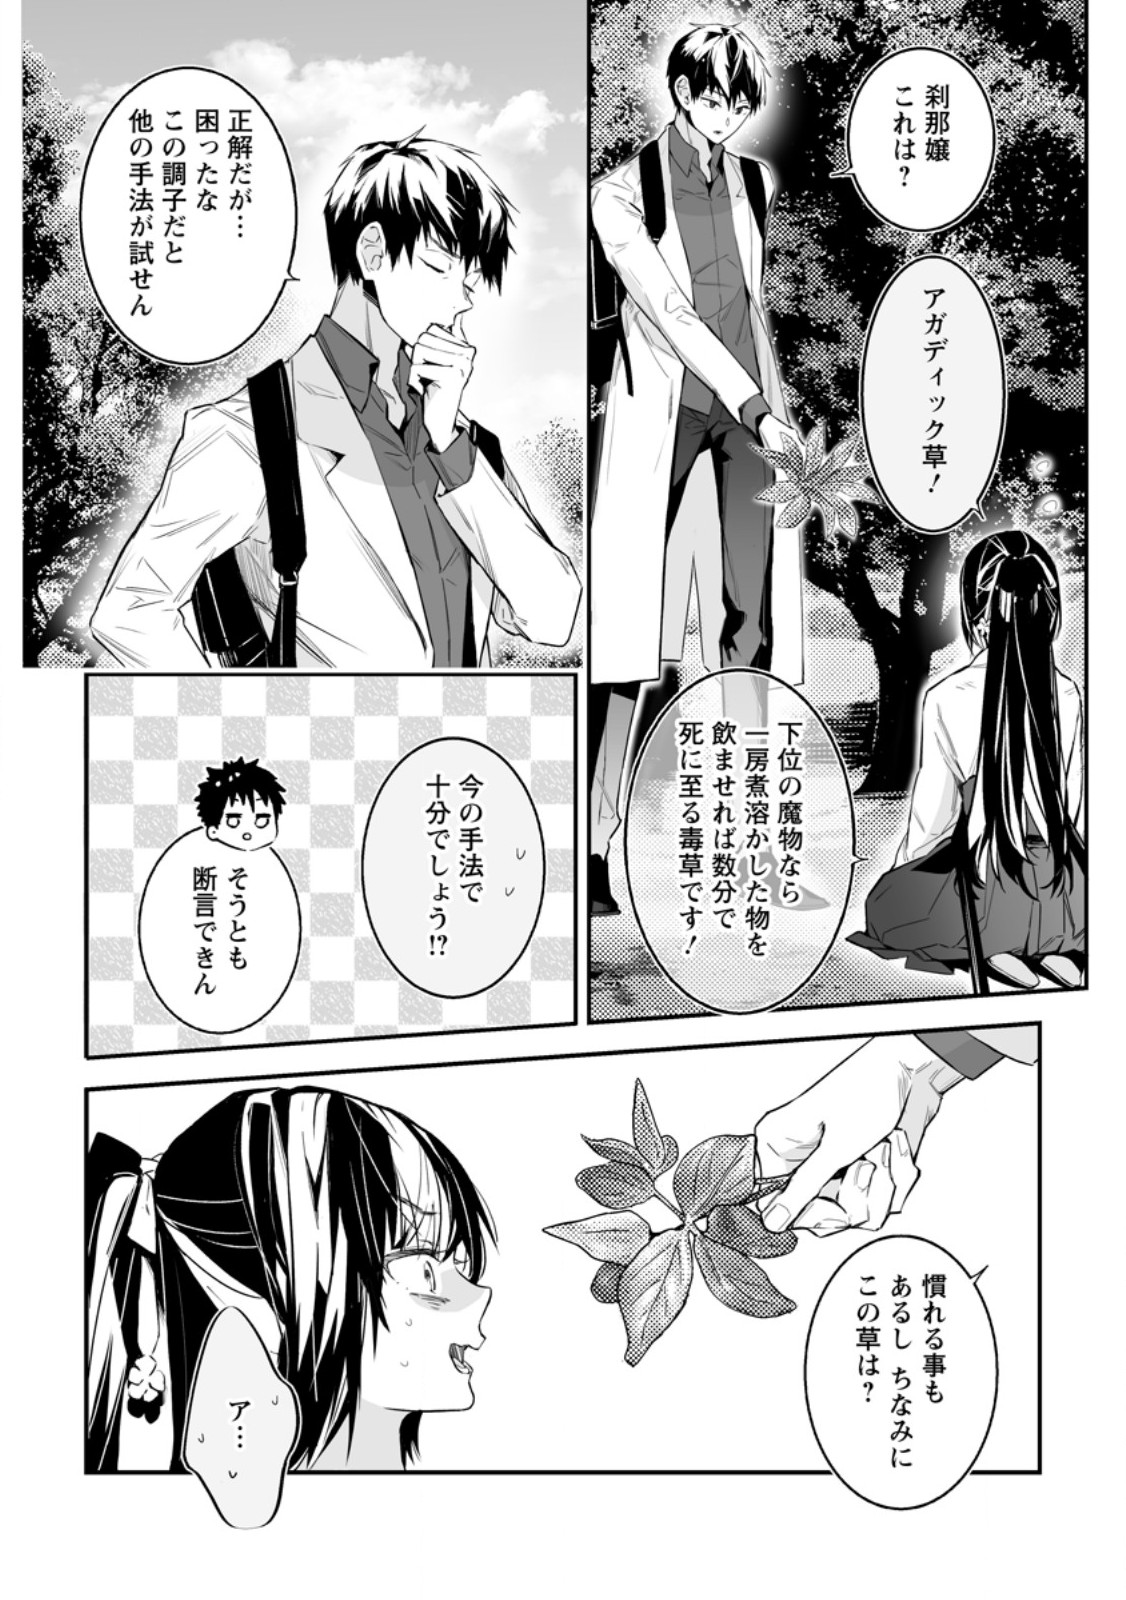 Hakui no Eiyuu - Chapter 35.2 - Page 4